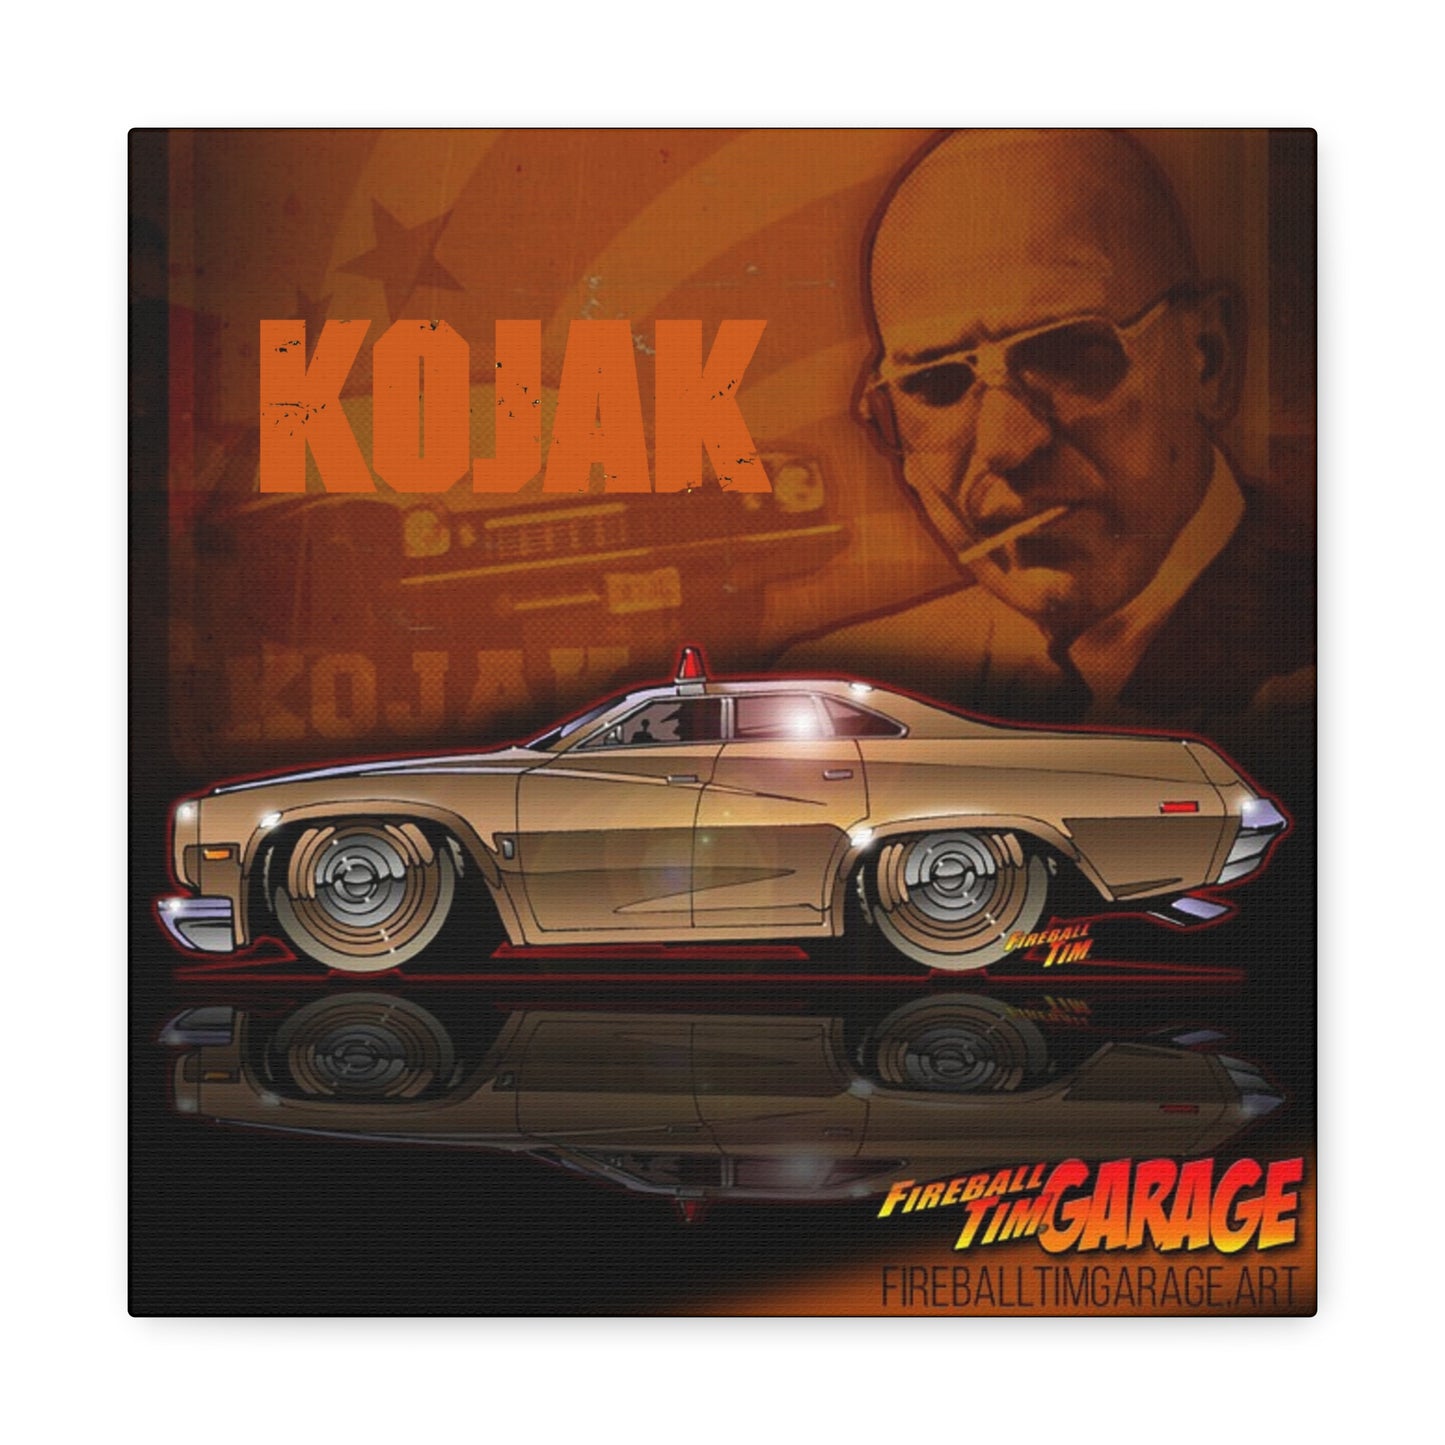 KOJAK TV Show Garage Canvas Gallery Art Print 12x12